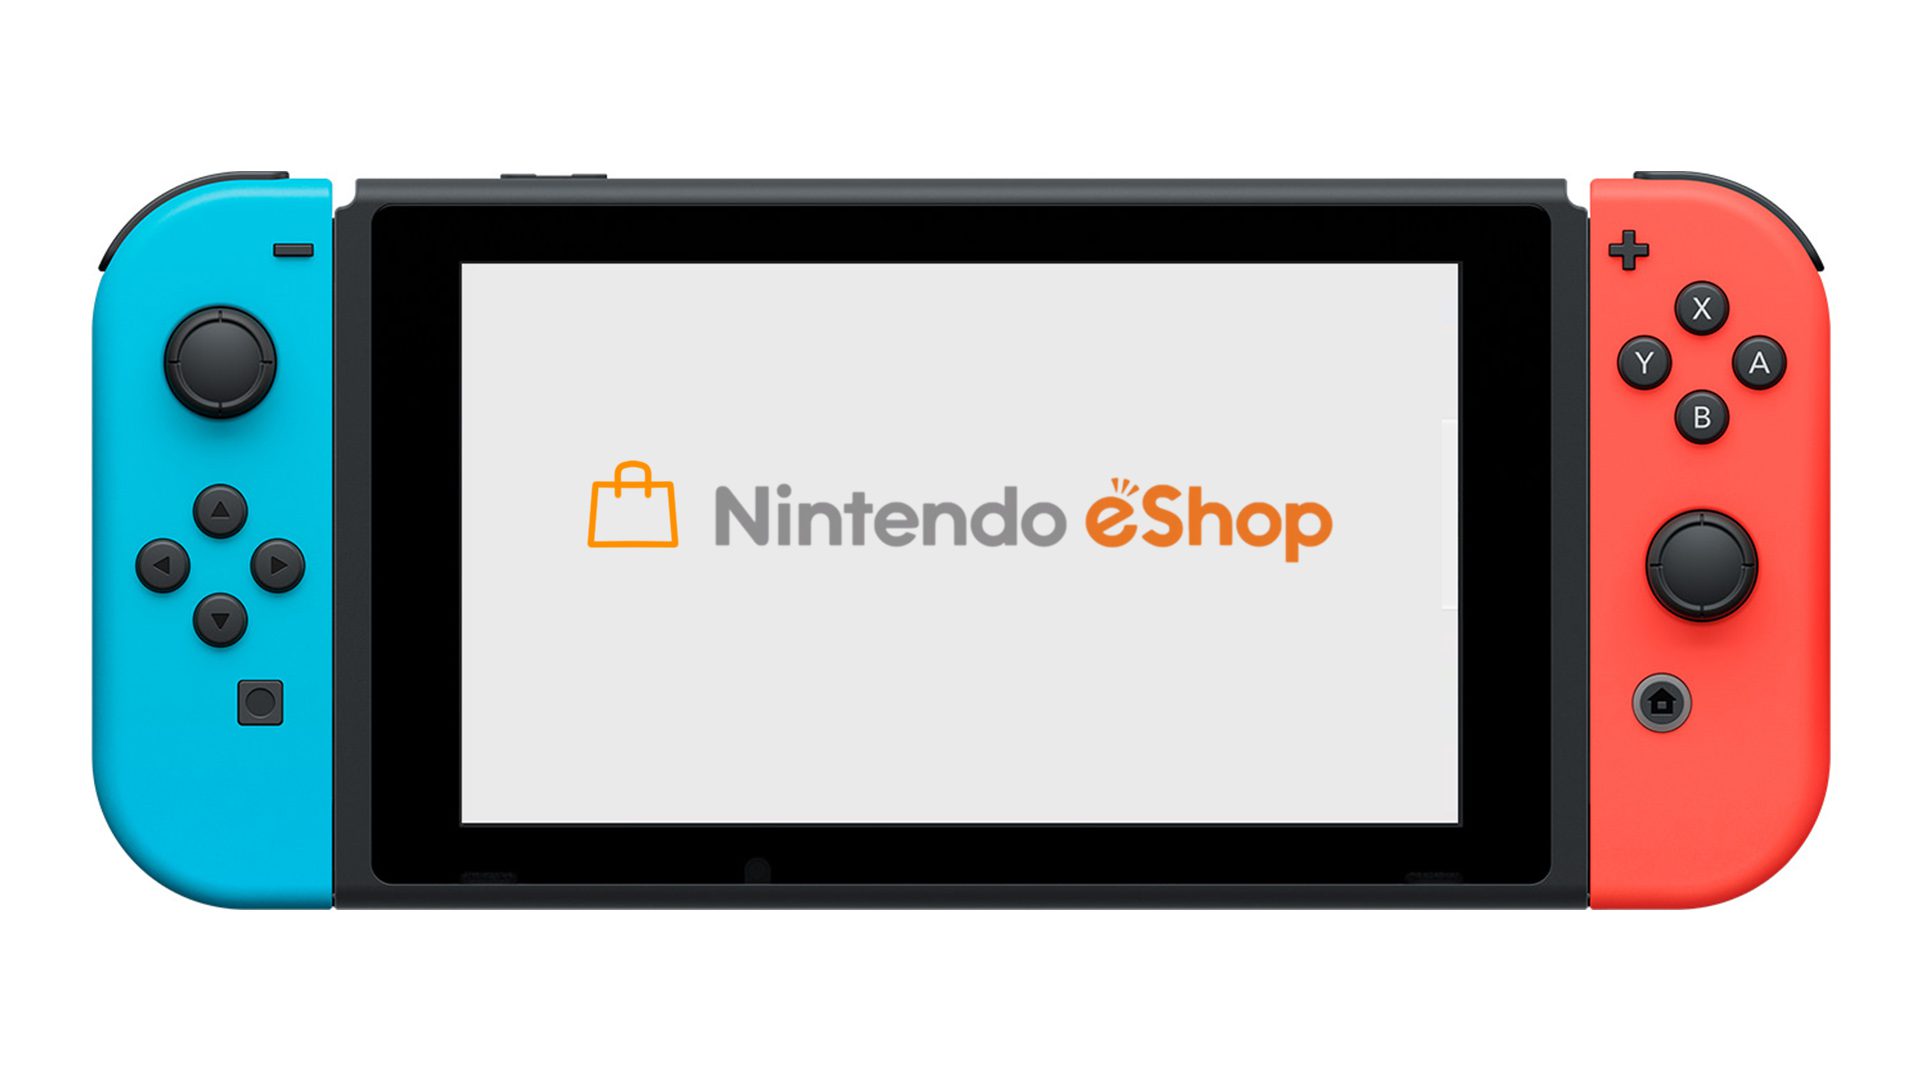 Nintendo kicks off huge eShop sale following their Nindies Showcase